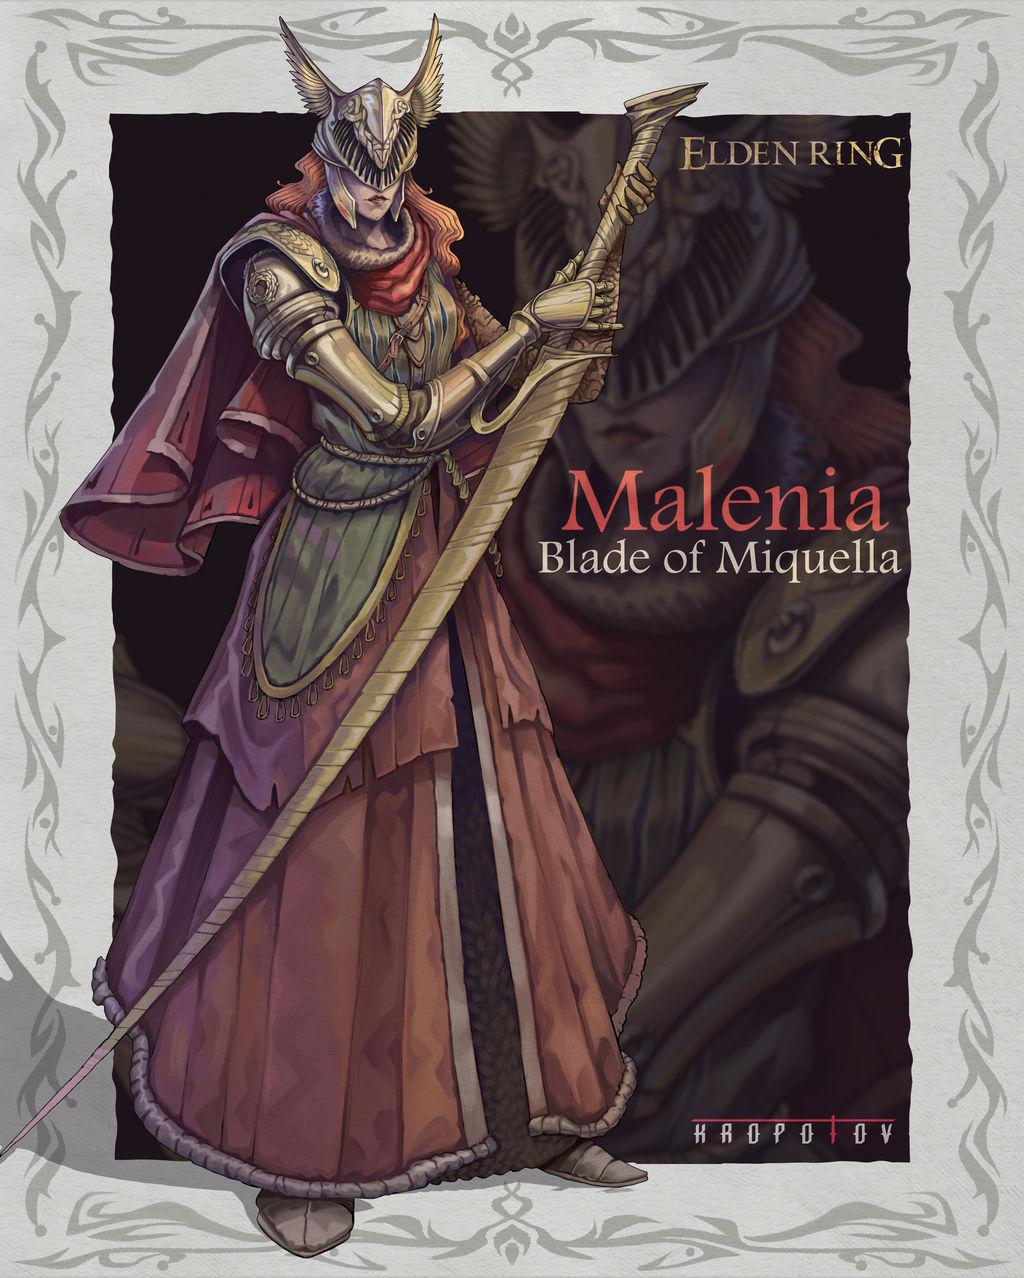 Elden Ring: Malenia the Severed [FAN-MADE] 